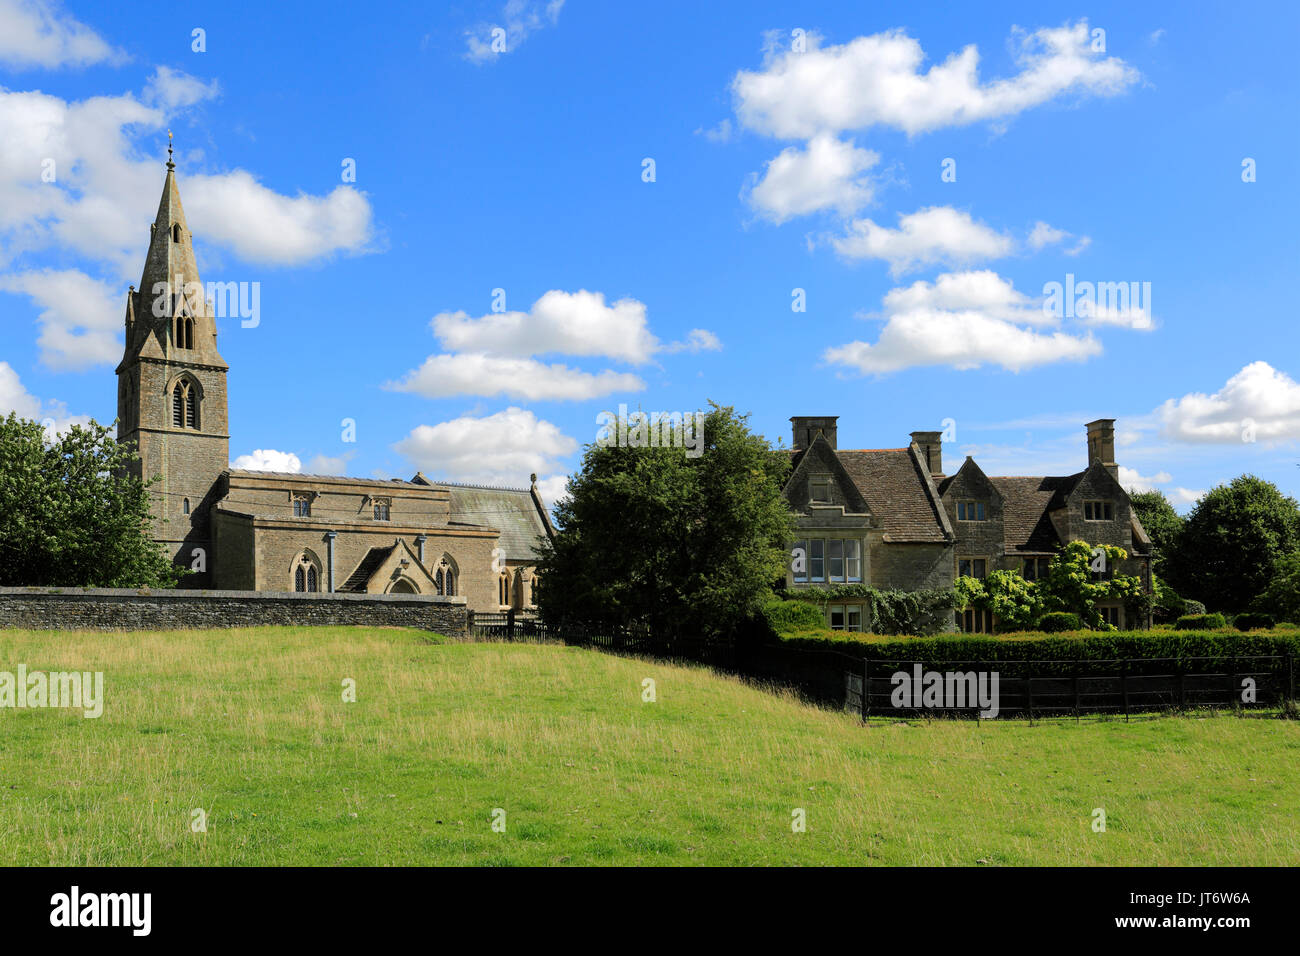 All Saints Church and Pilton Manor, Pilton village, Northamptonshire, England, UK Stock Photo